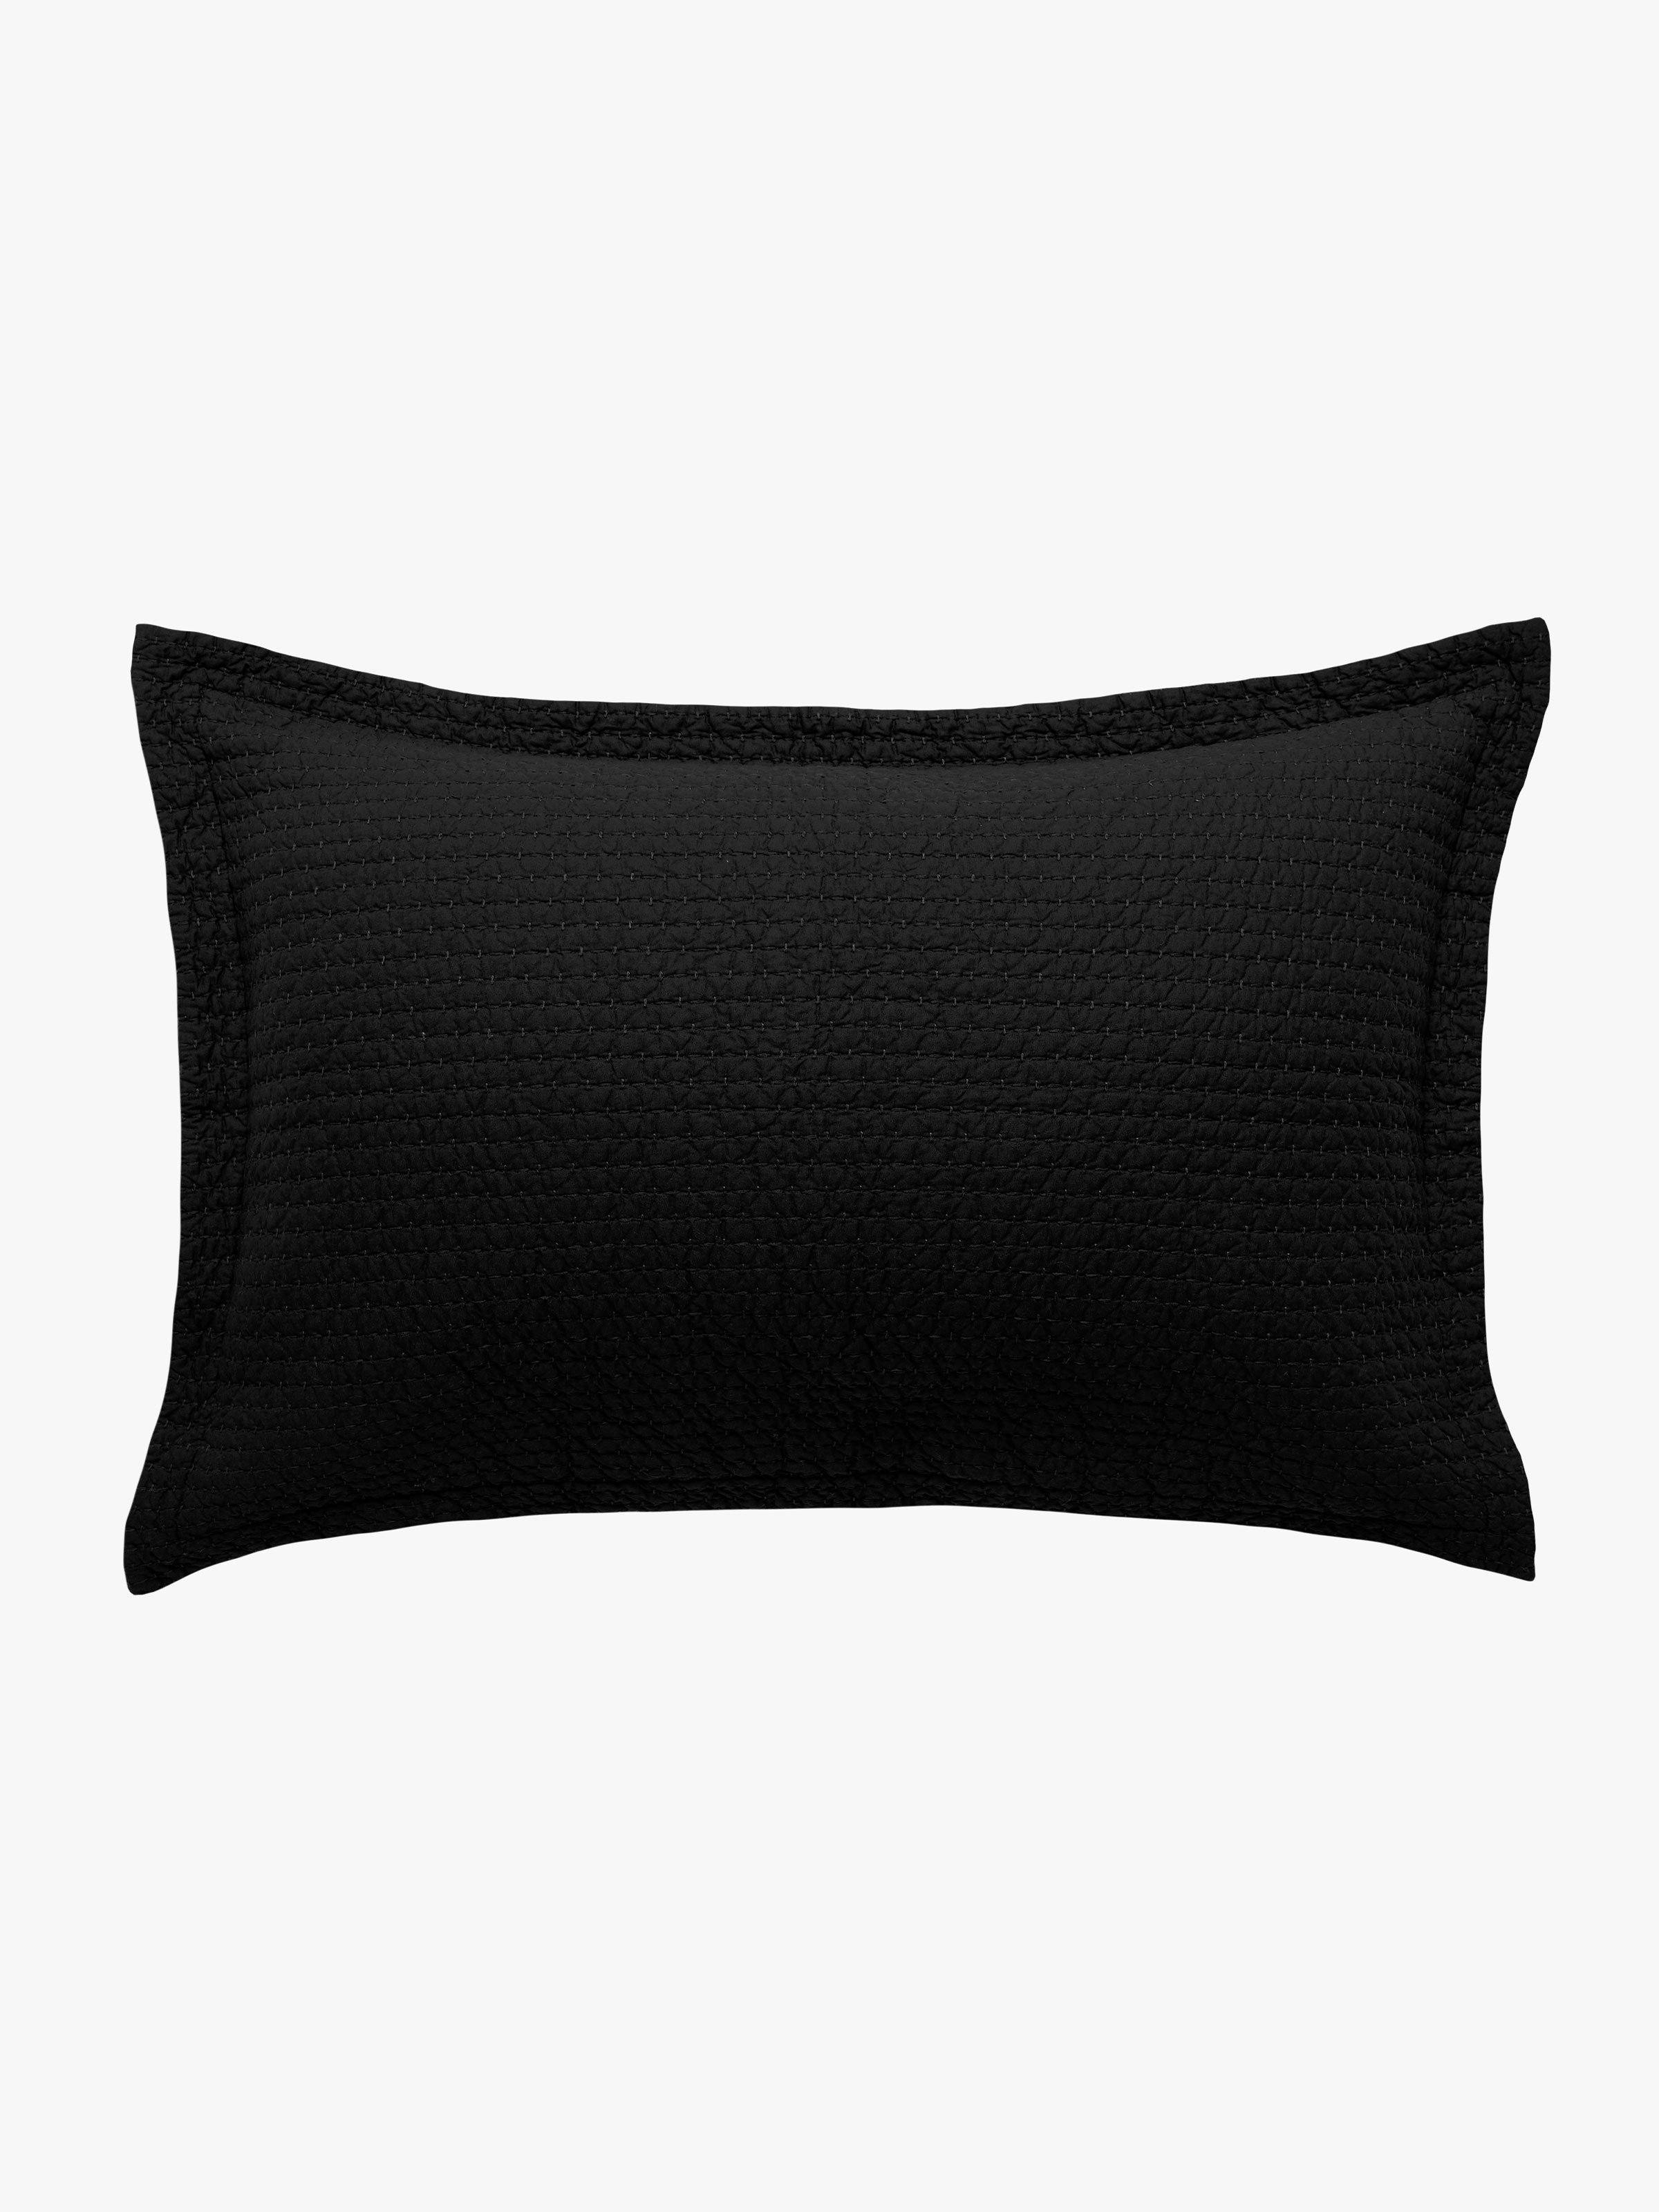 Aspen Quilted Pillowcase - Black Quilted Pillowcase 2020 Standard Pillowcase 